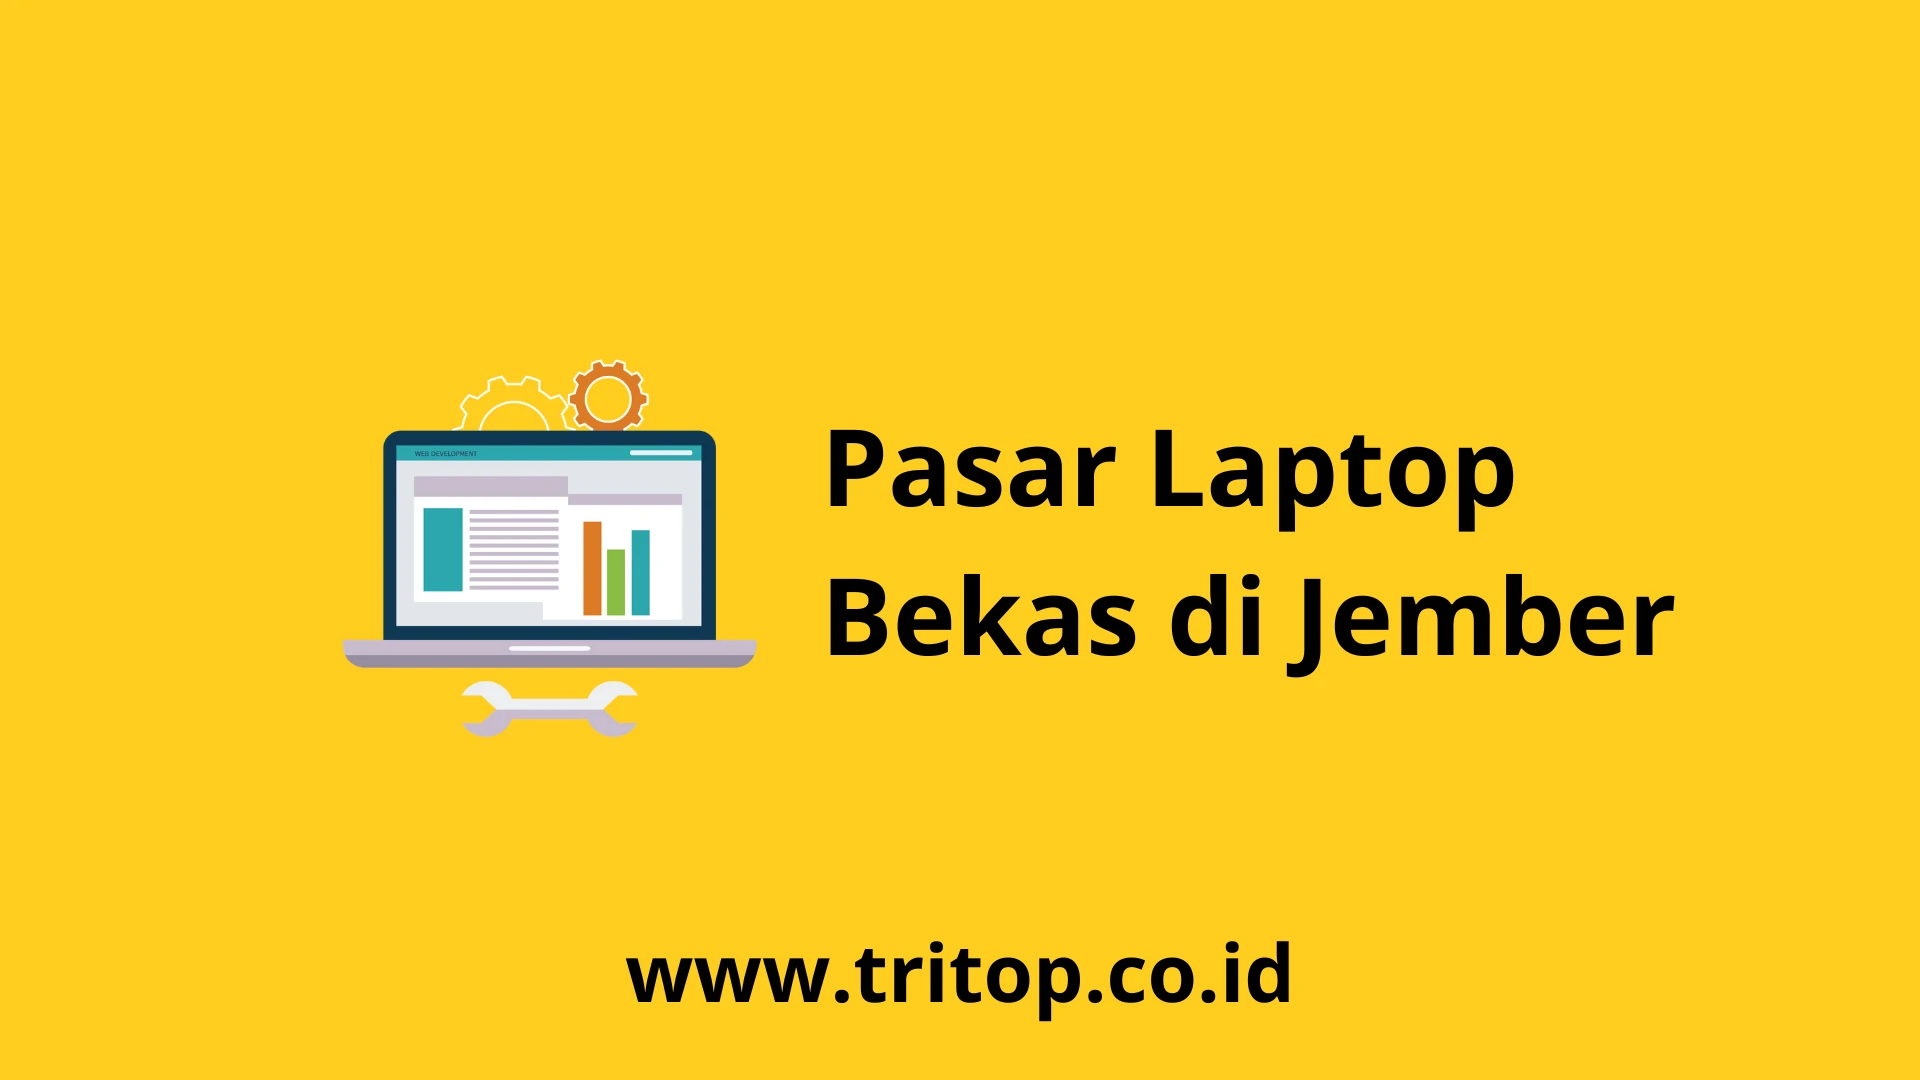 Laptop Bekas Jember Tritop.co.id